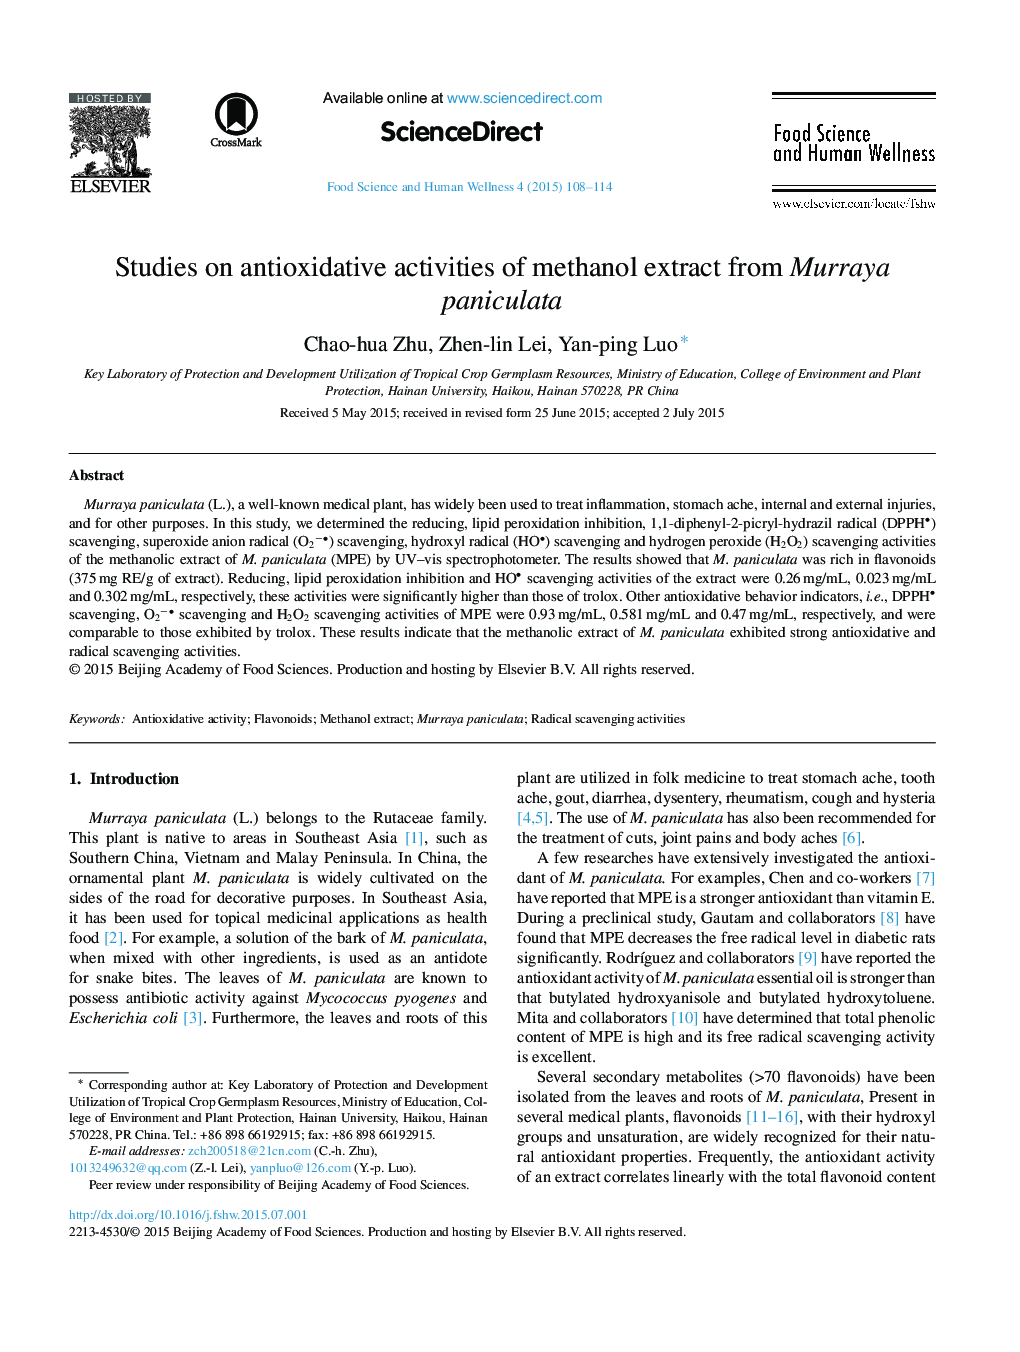 Studies on antioxidative activities of methanol extract from Murraya paniculata 